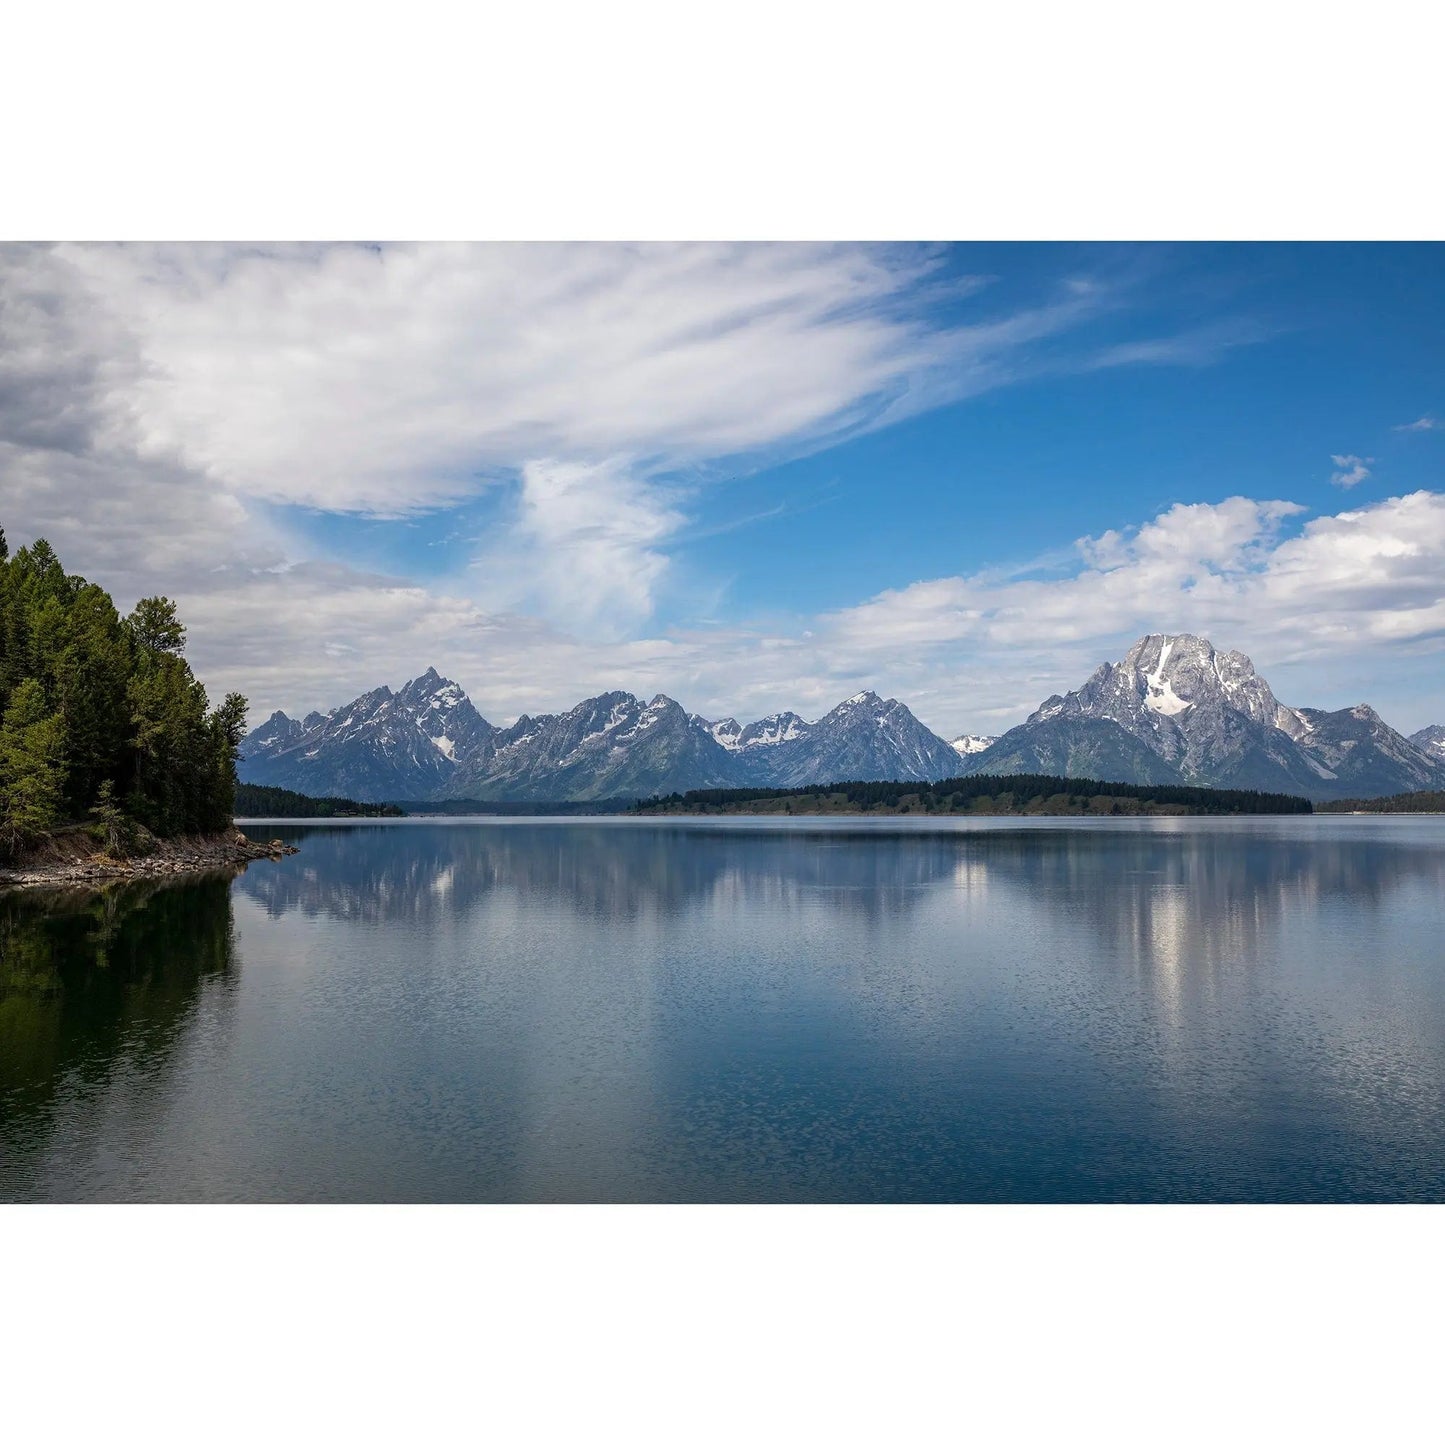 Grand Tetons reflect on Jackson Lake landscape by Lisa Blount Photography